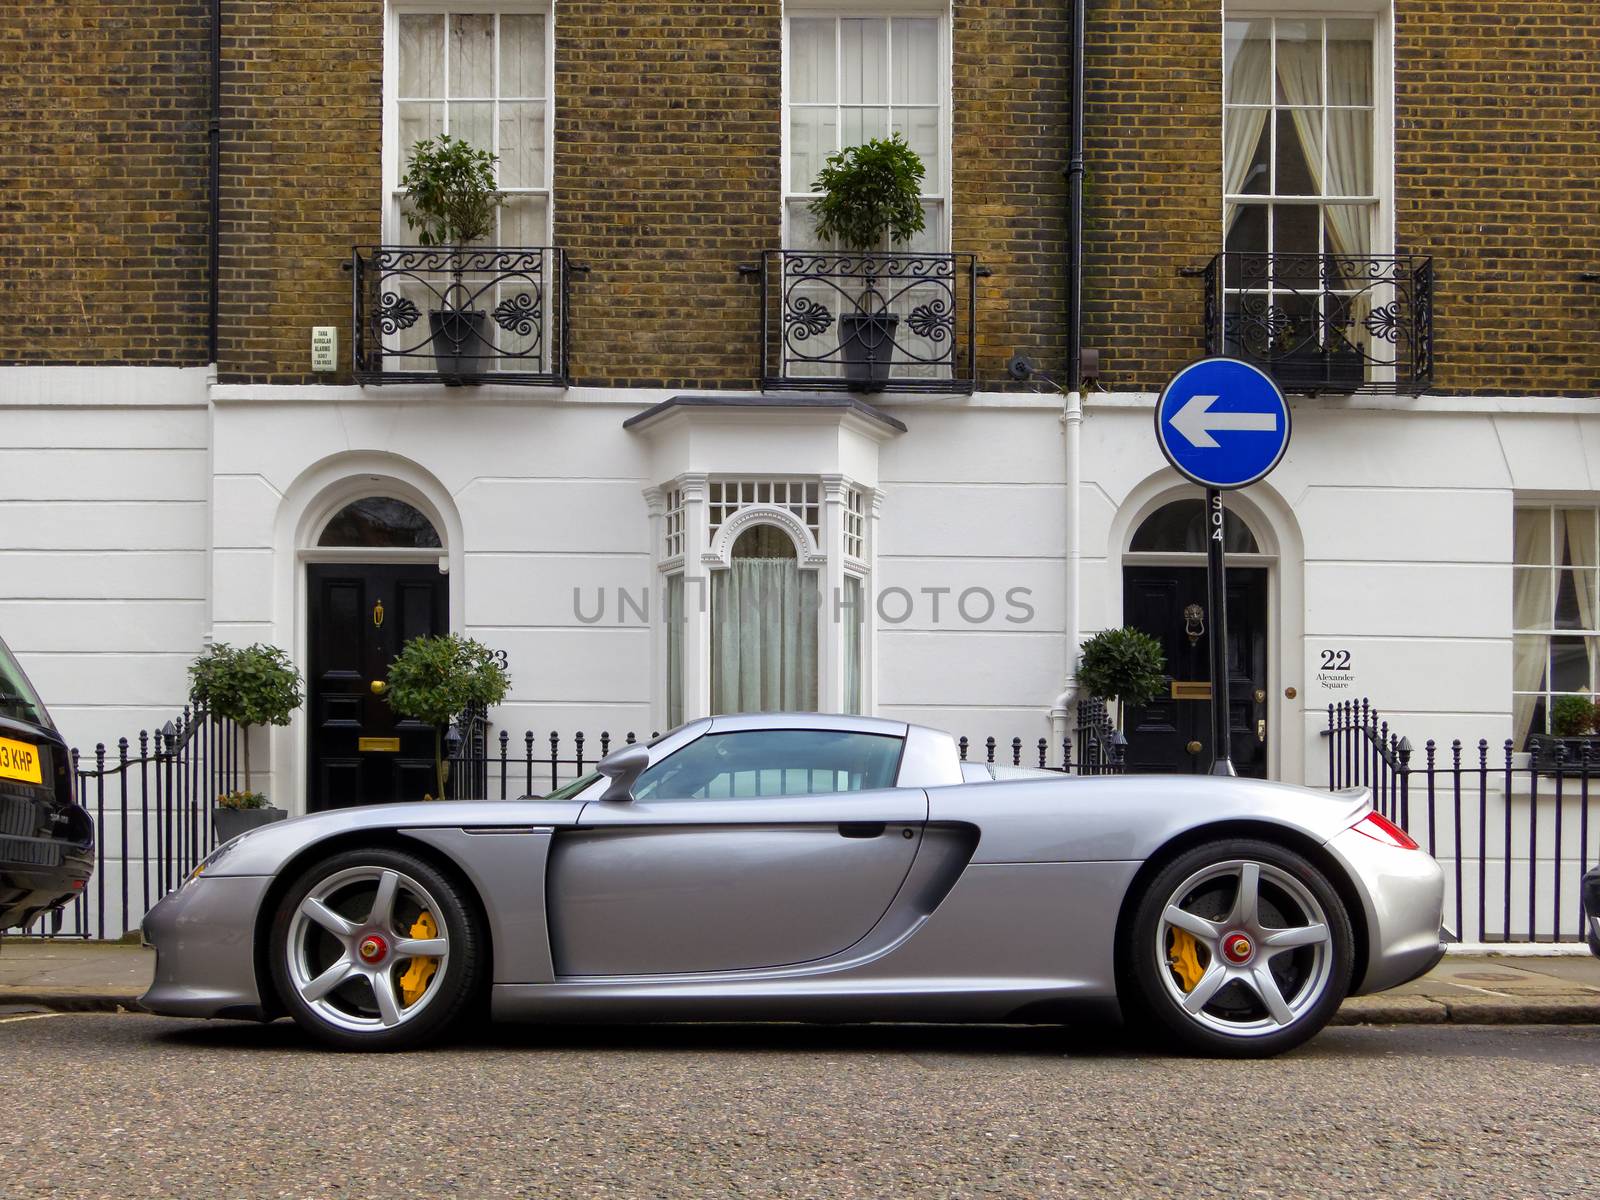 Porsche Carrera GT in London by dutourdumonde